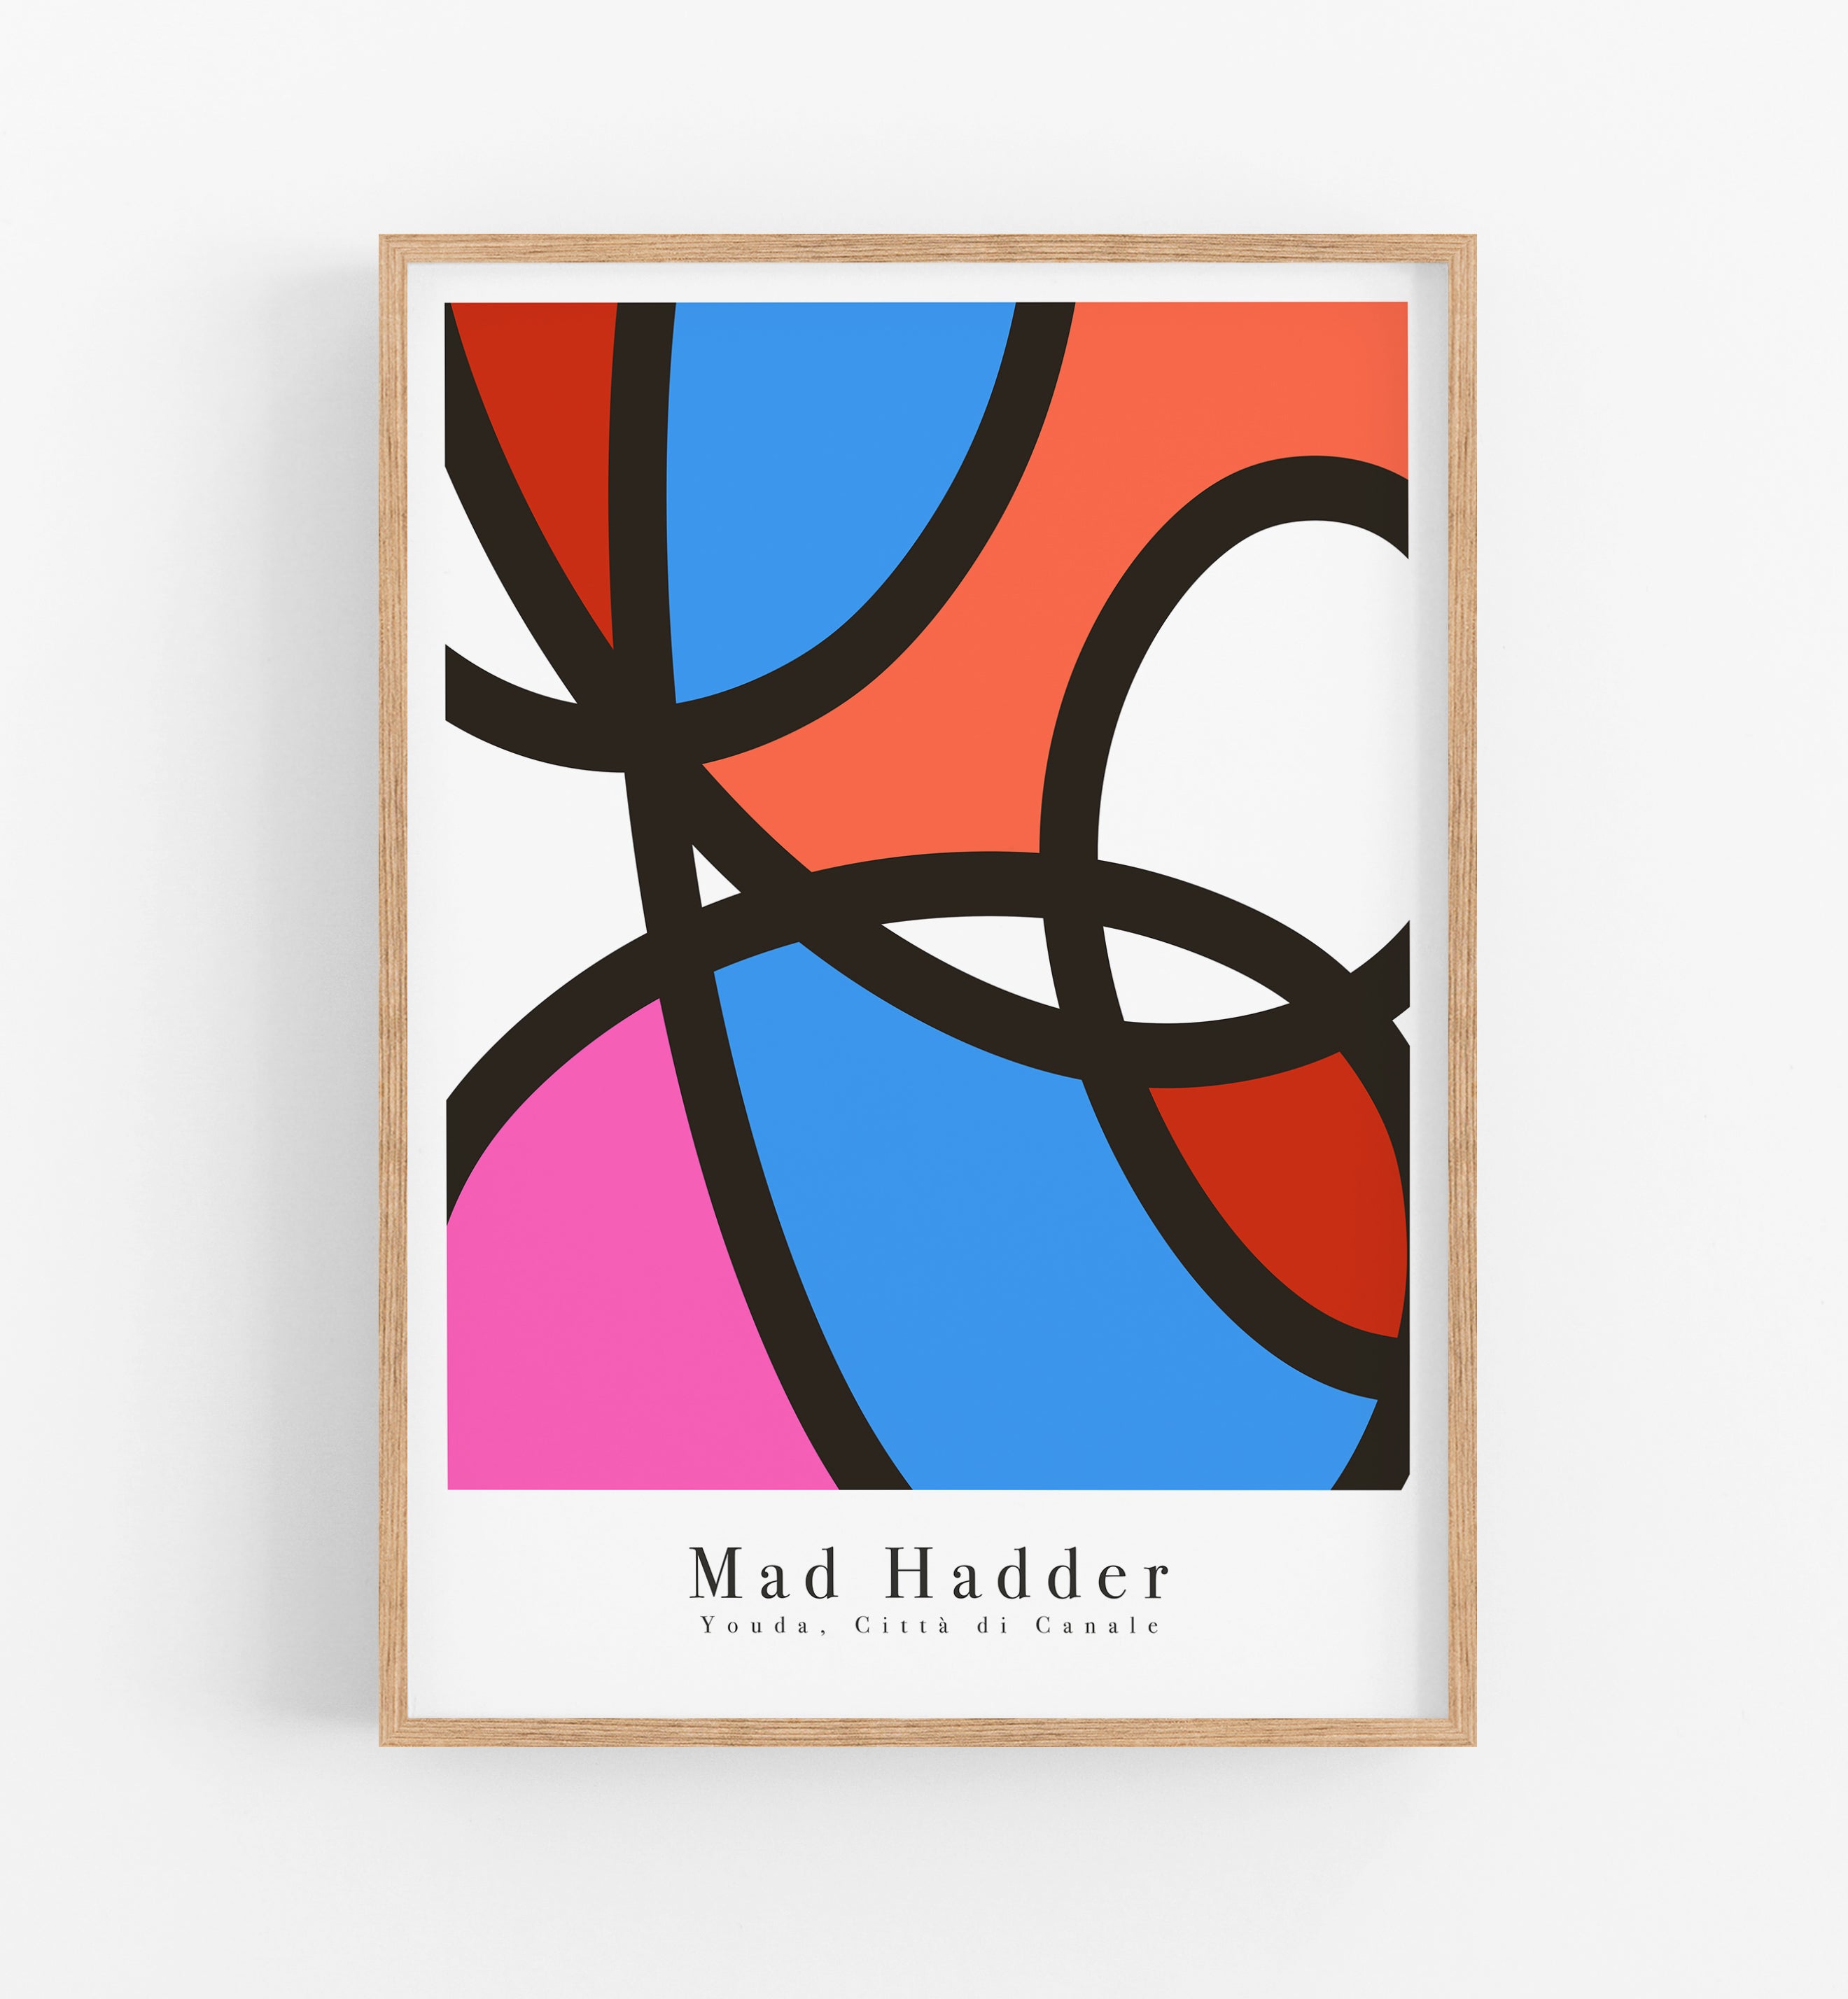 Mad Hadder